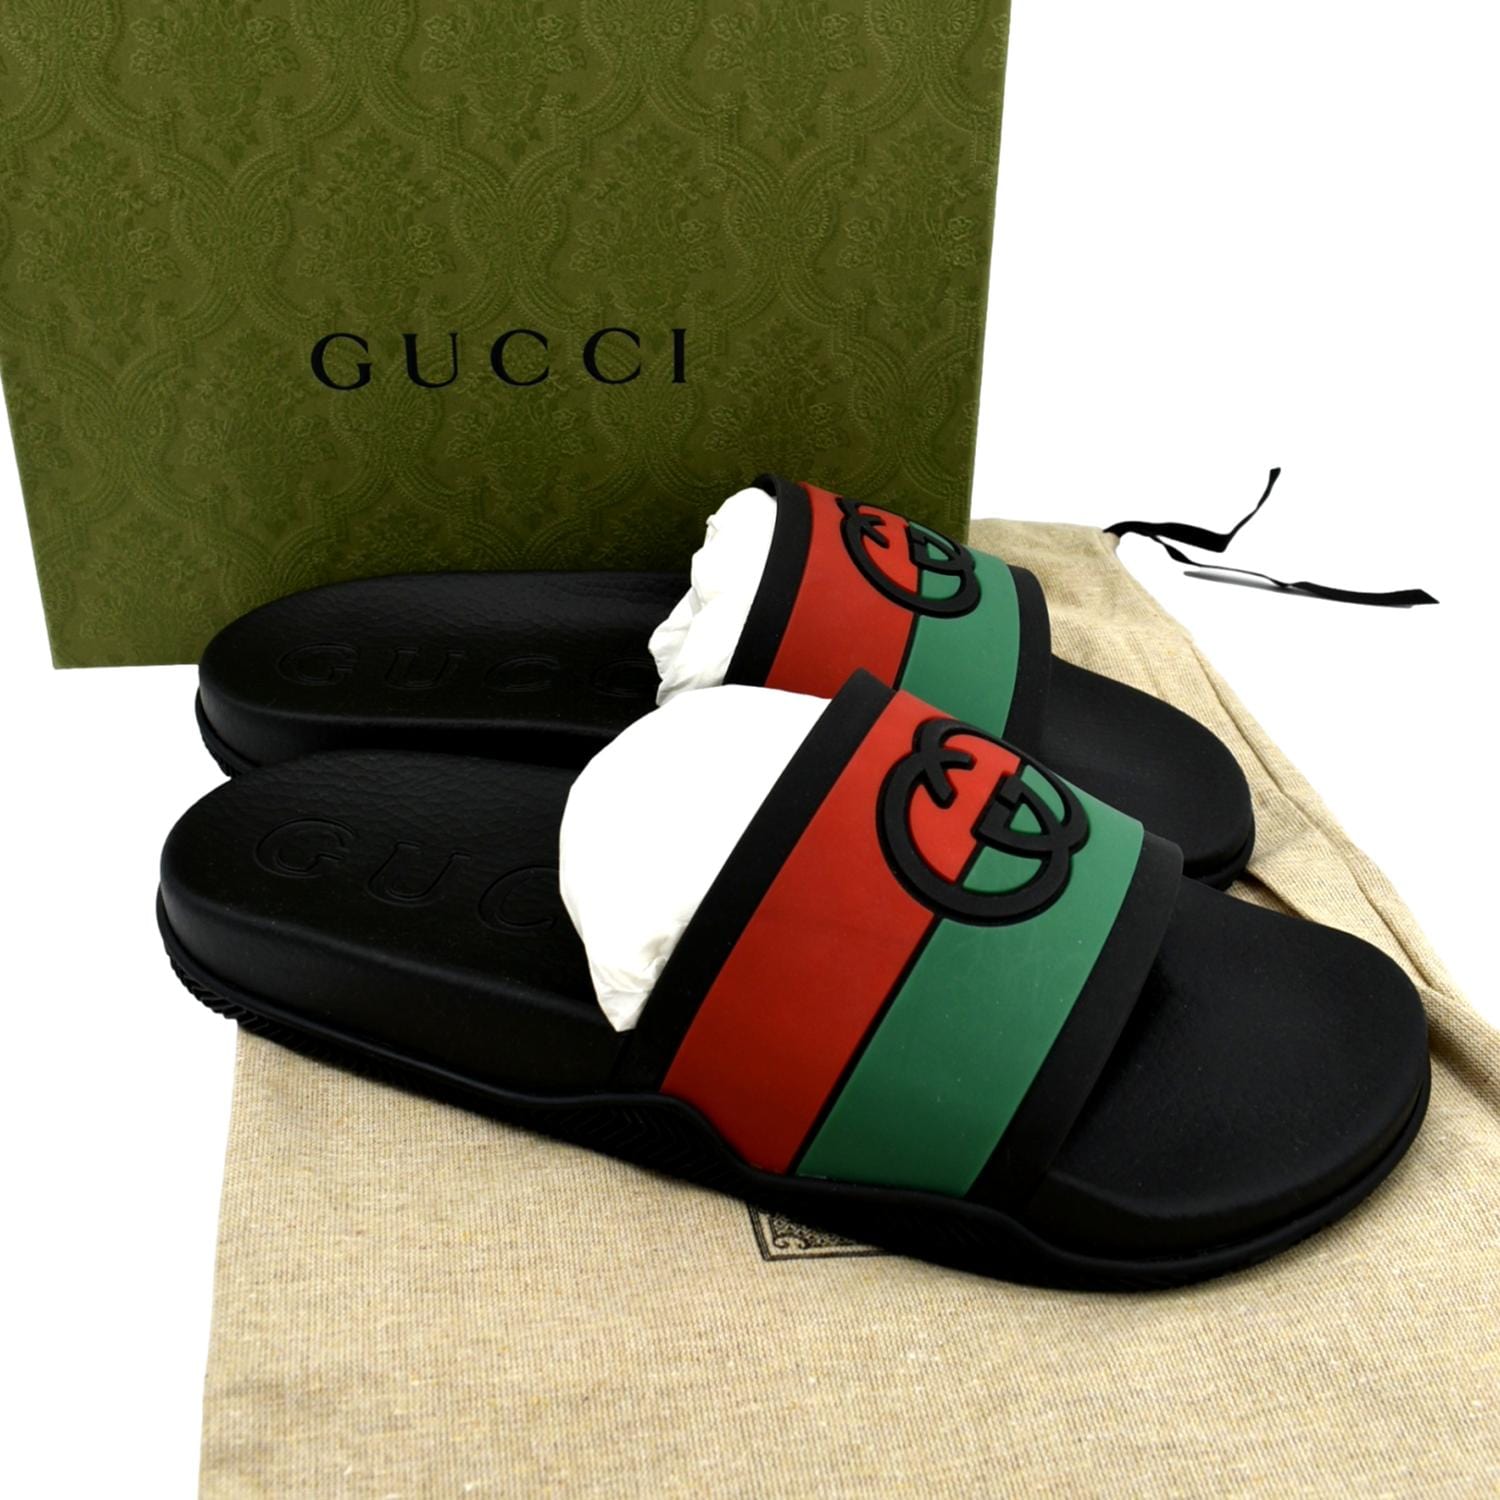 Gucci Rubber Sandal  Gucci slipper, Rubber sandals, Fashion shoes